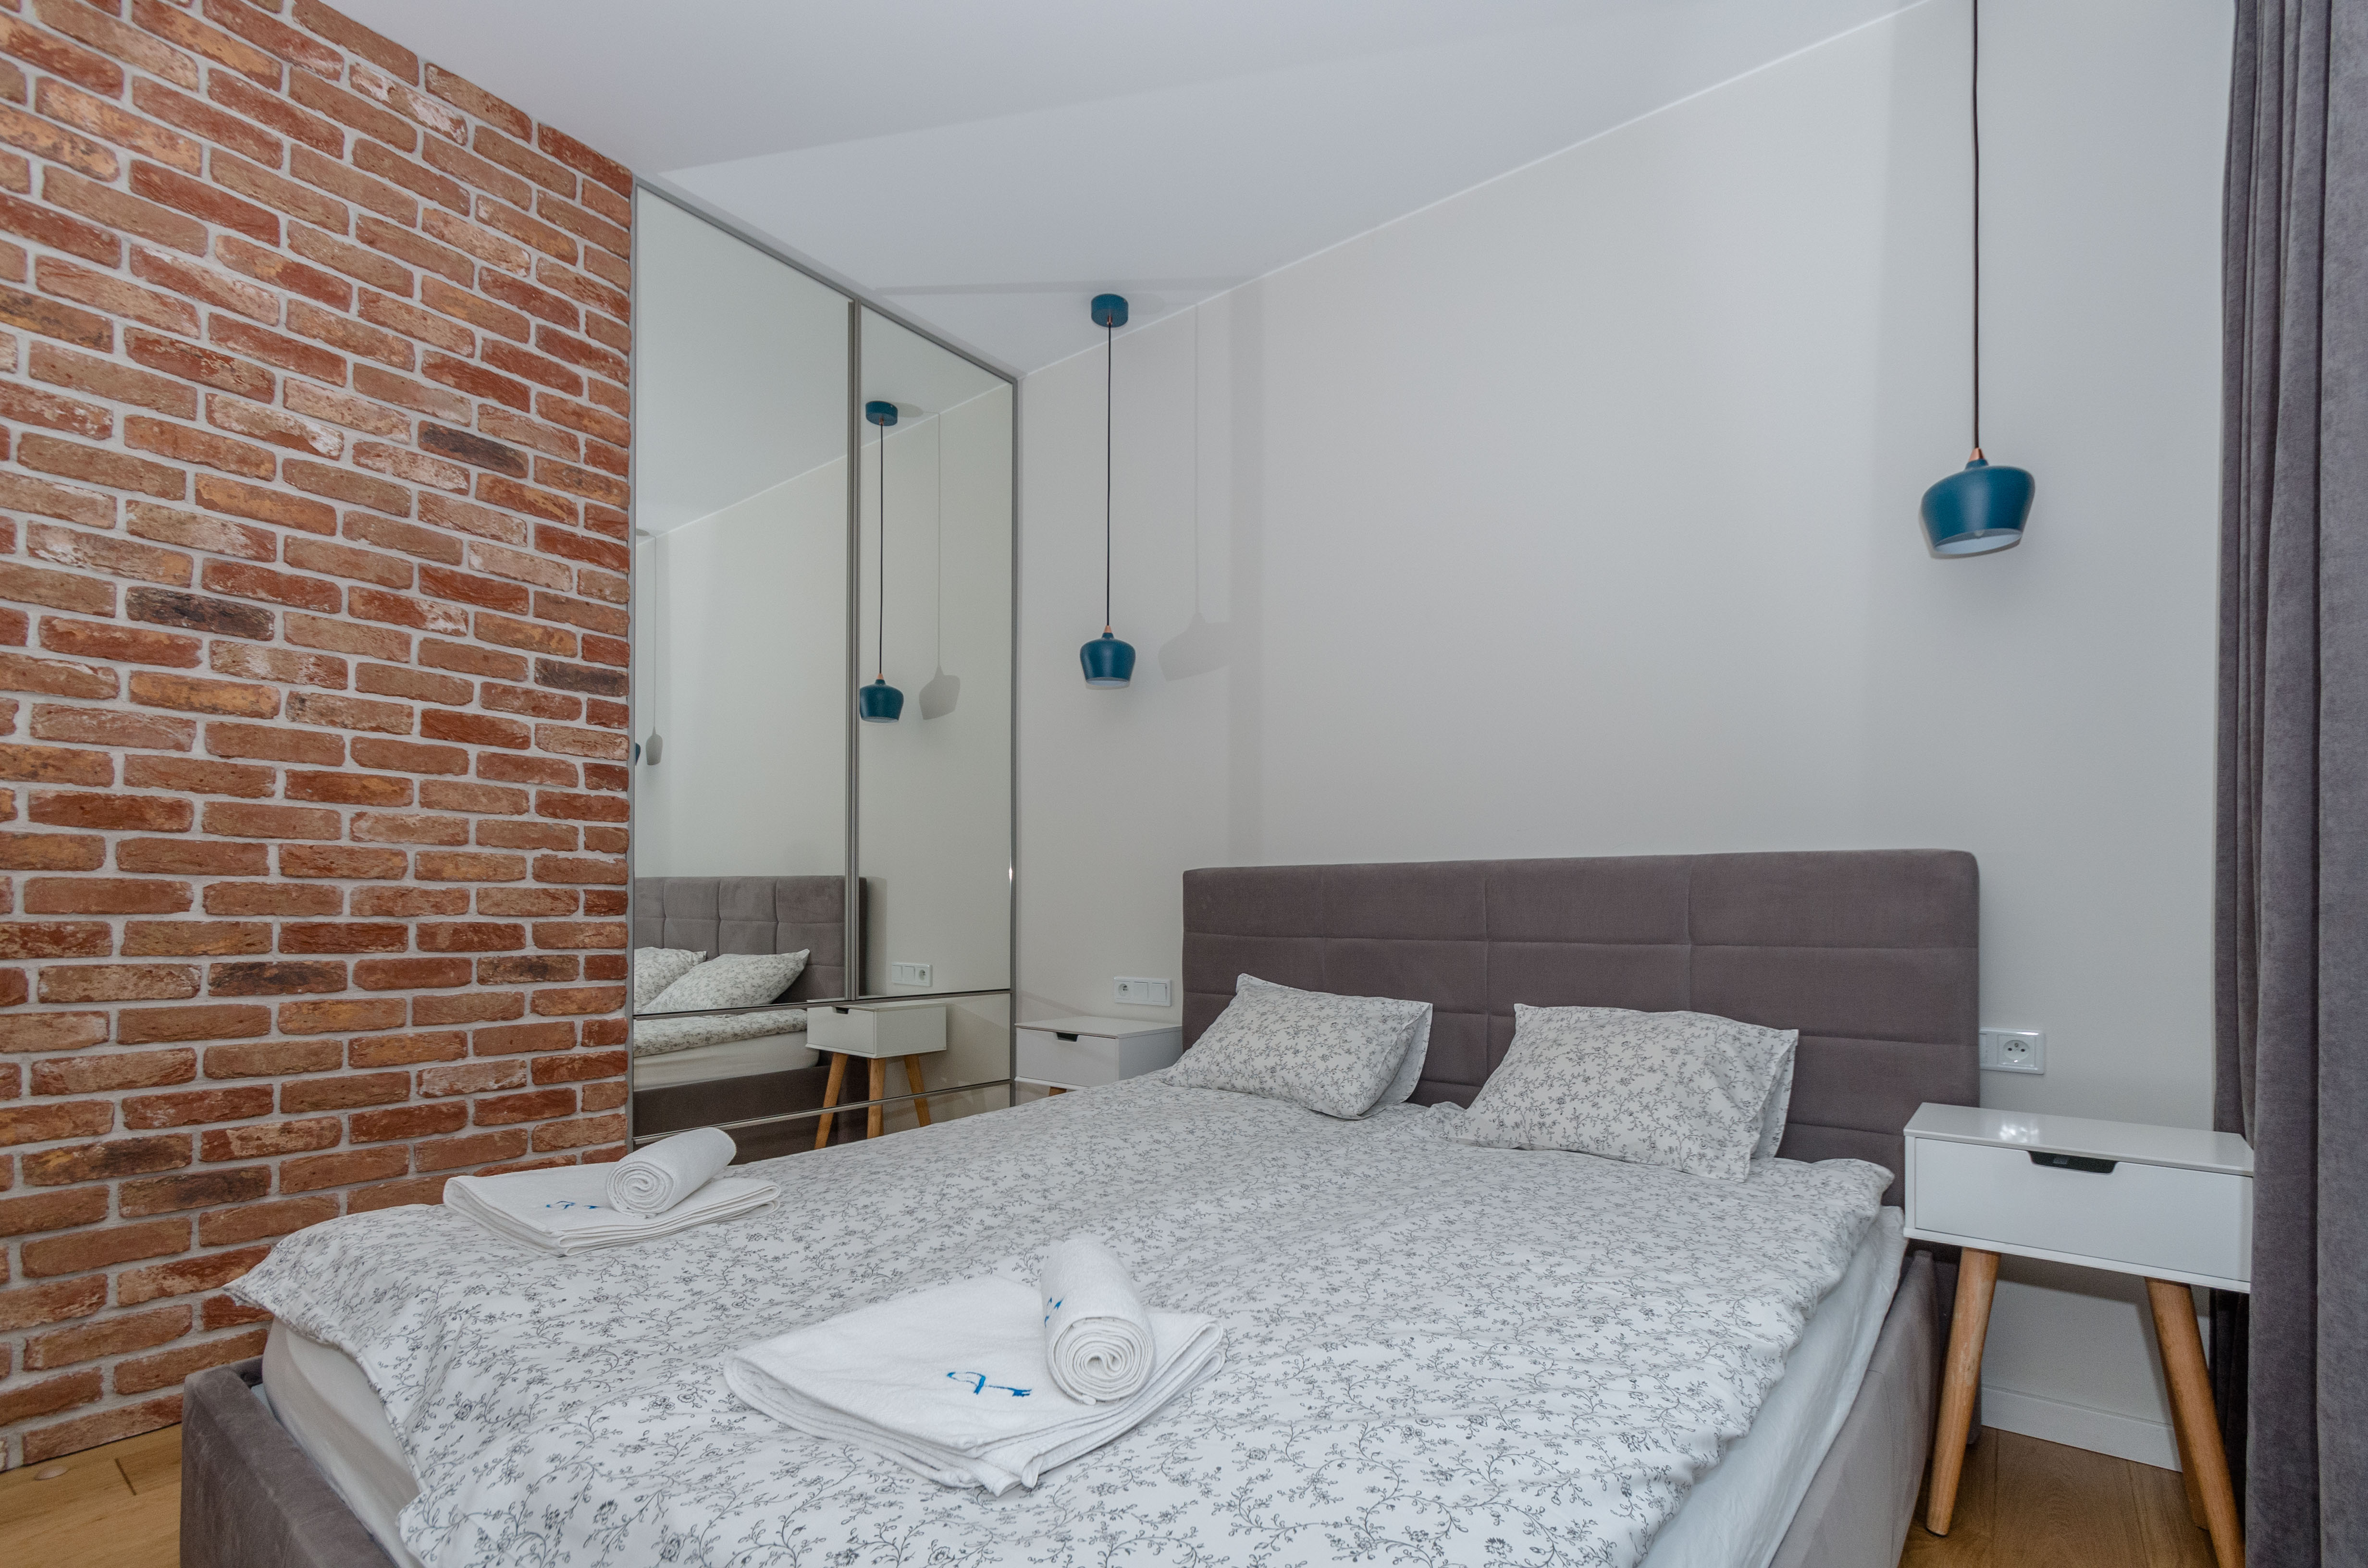 Tenerife (Metropolitan B) Apartment in Browar Lubicz in Krakow Old Town, One bedroom apartment - LANDMARK APARTMENTS